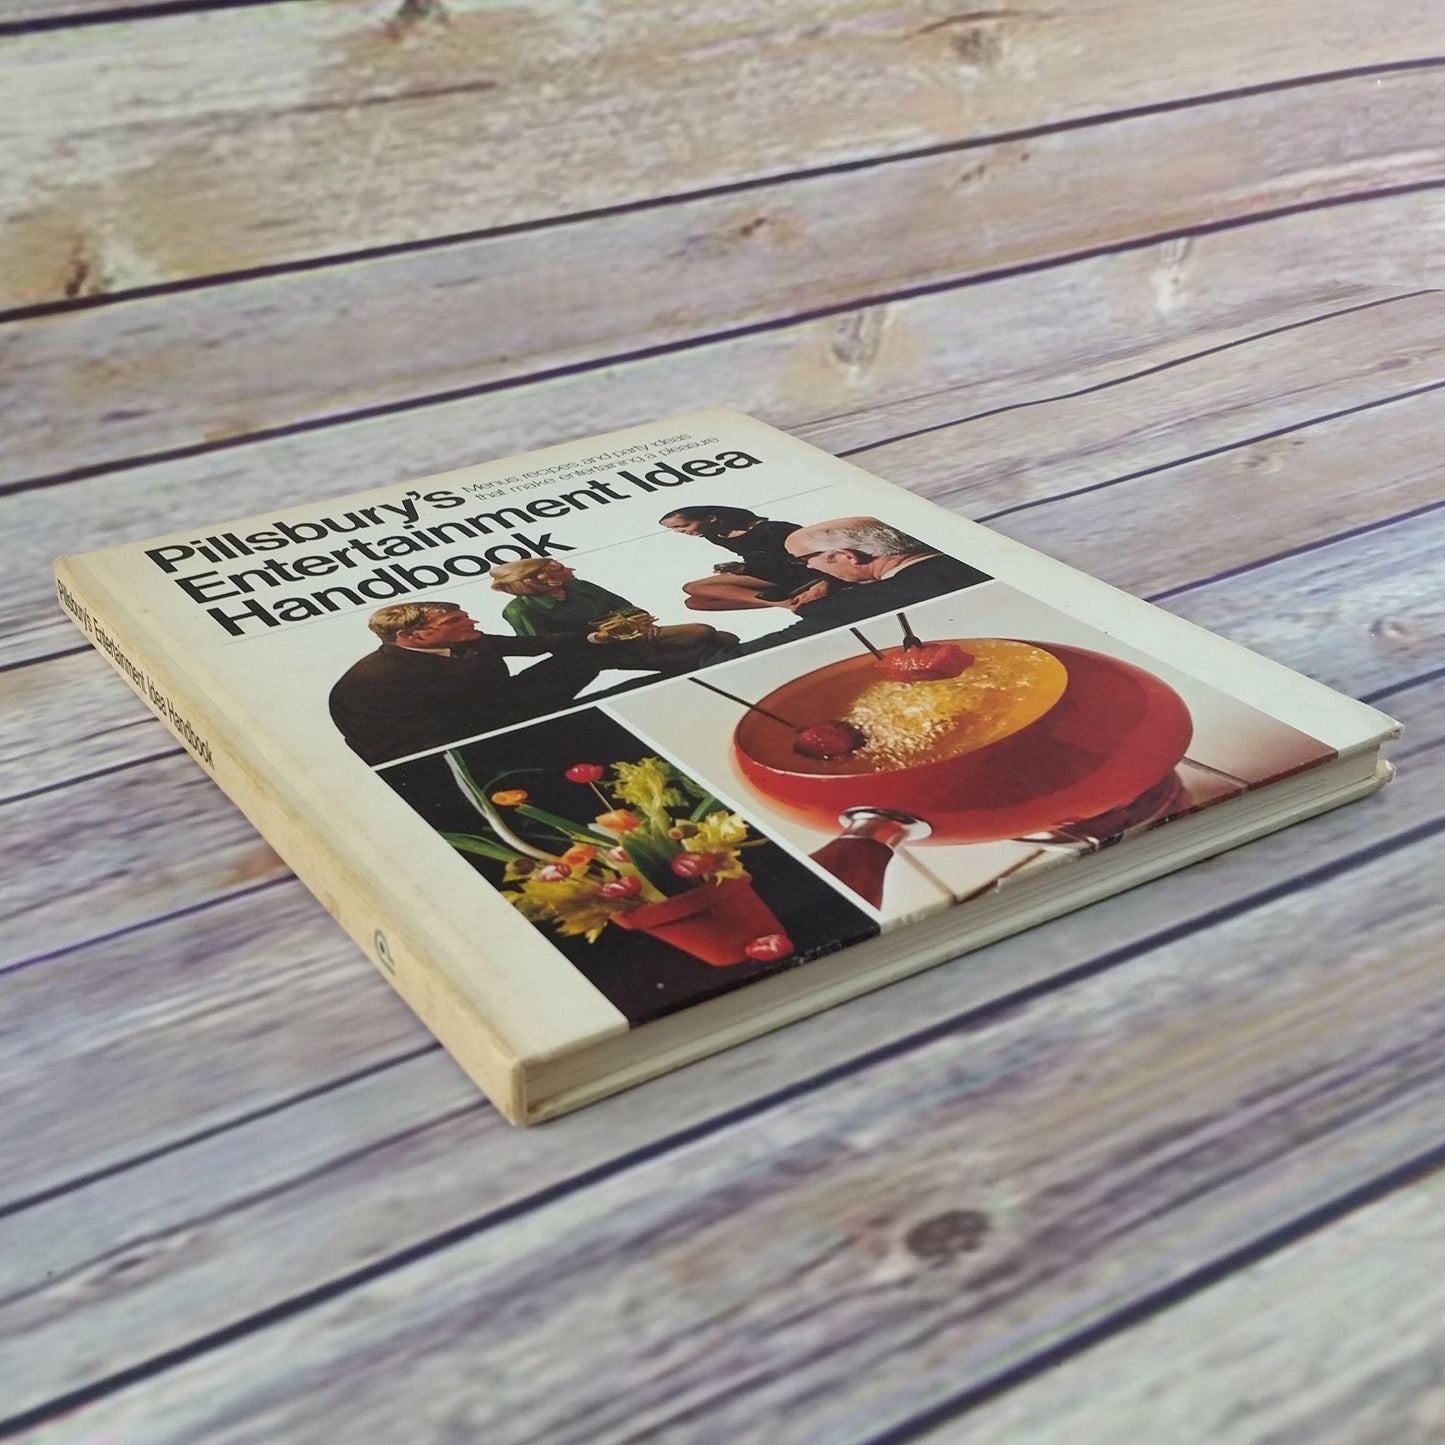 Vintage Cookbook Pillsbury Entertainment Idea Handbook Recipes Hardcover 1970 Meat Recipes and Menu Ideas for Entertaining